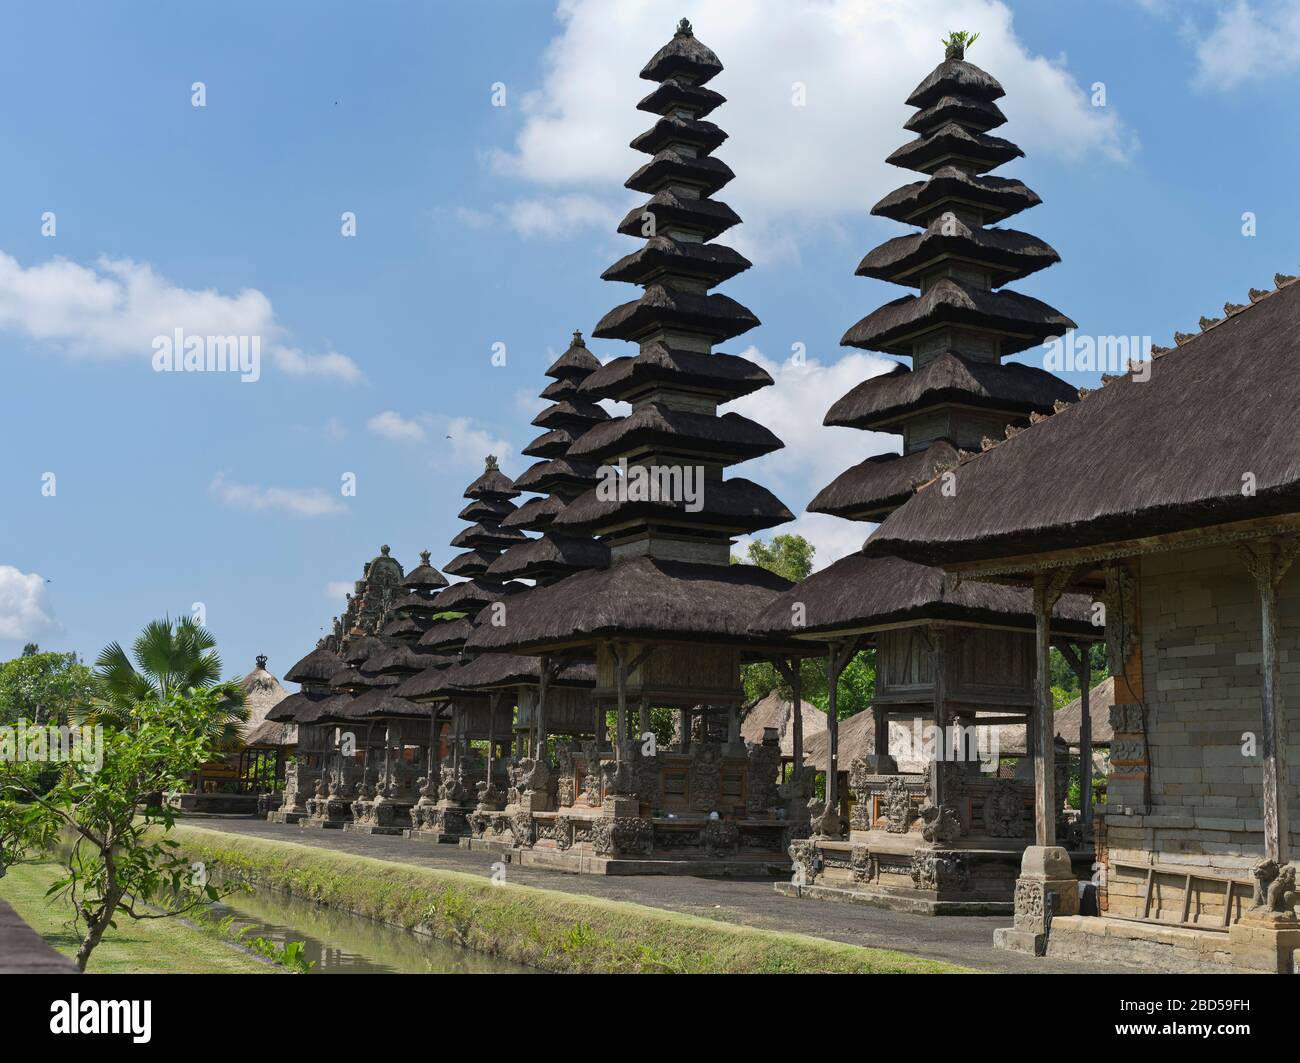 dh Pura Taman Ayun Royal Temple BALI INDONESIA Balinese Hindu Mengwi temples inner sanctum pelinggih meru towers blue sky architecture Stock Photo